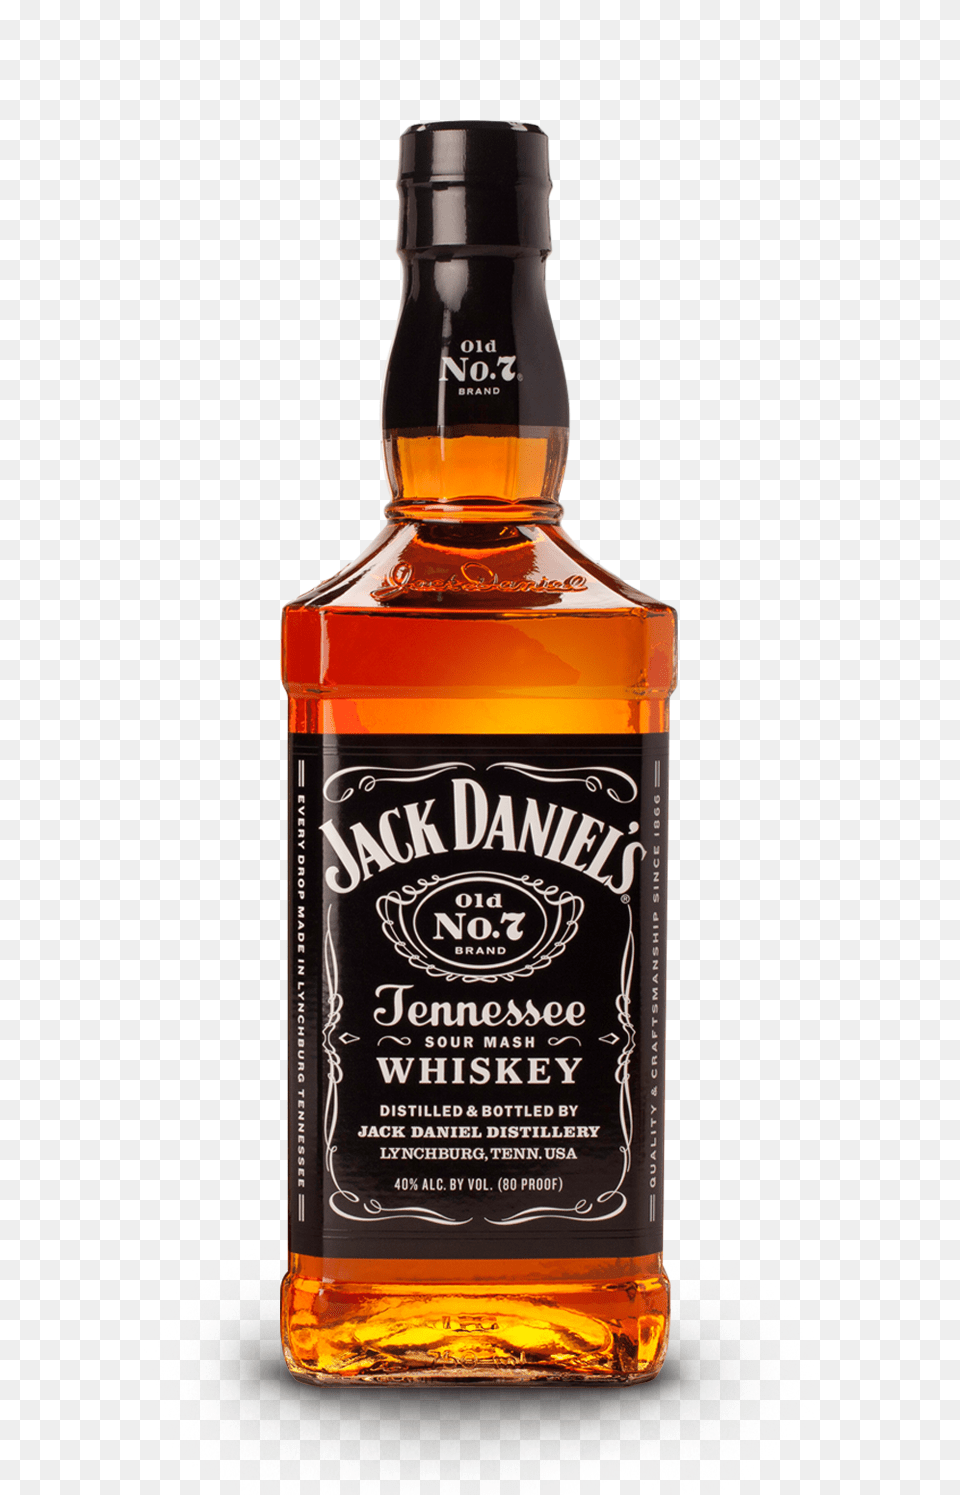 Whisky, Alcohol, Beverage, Liquor, Bottle Png Image